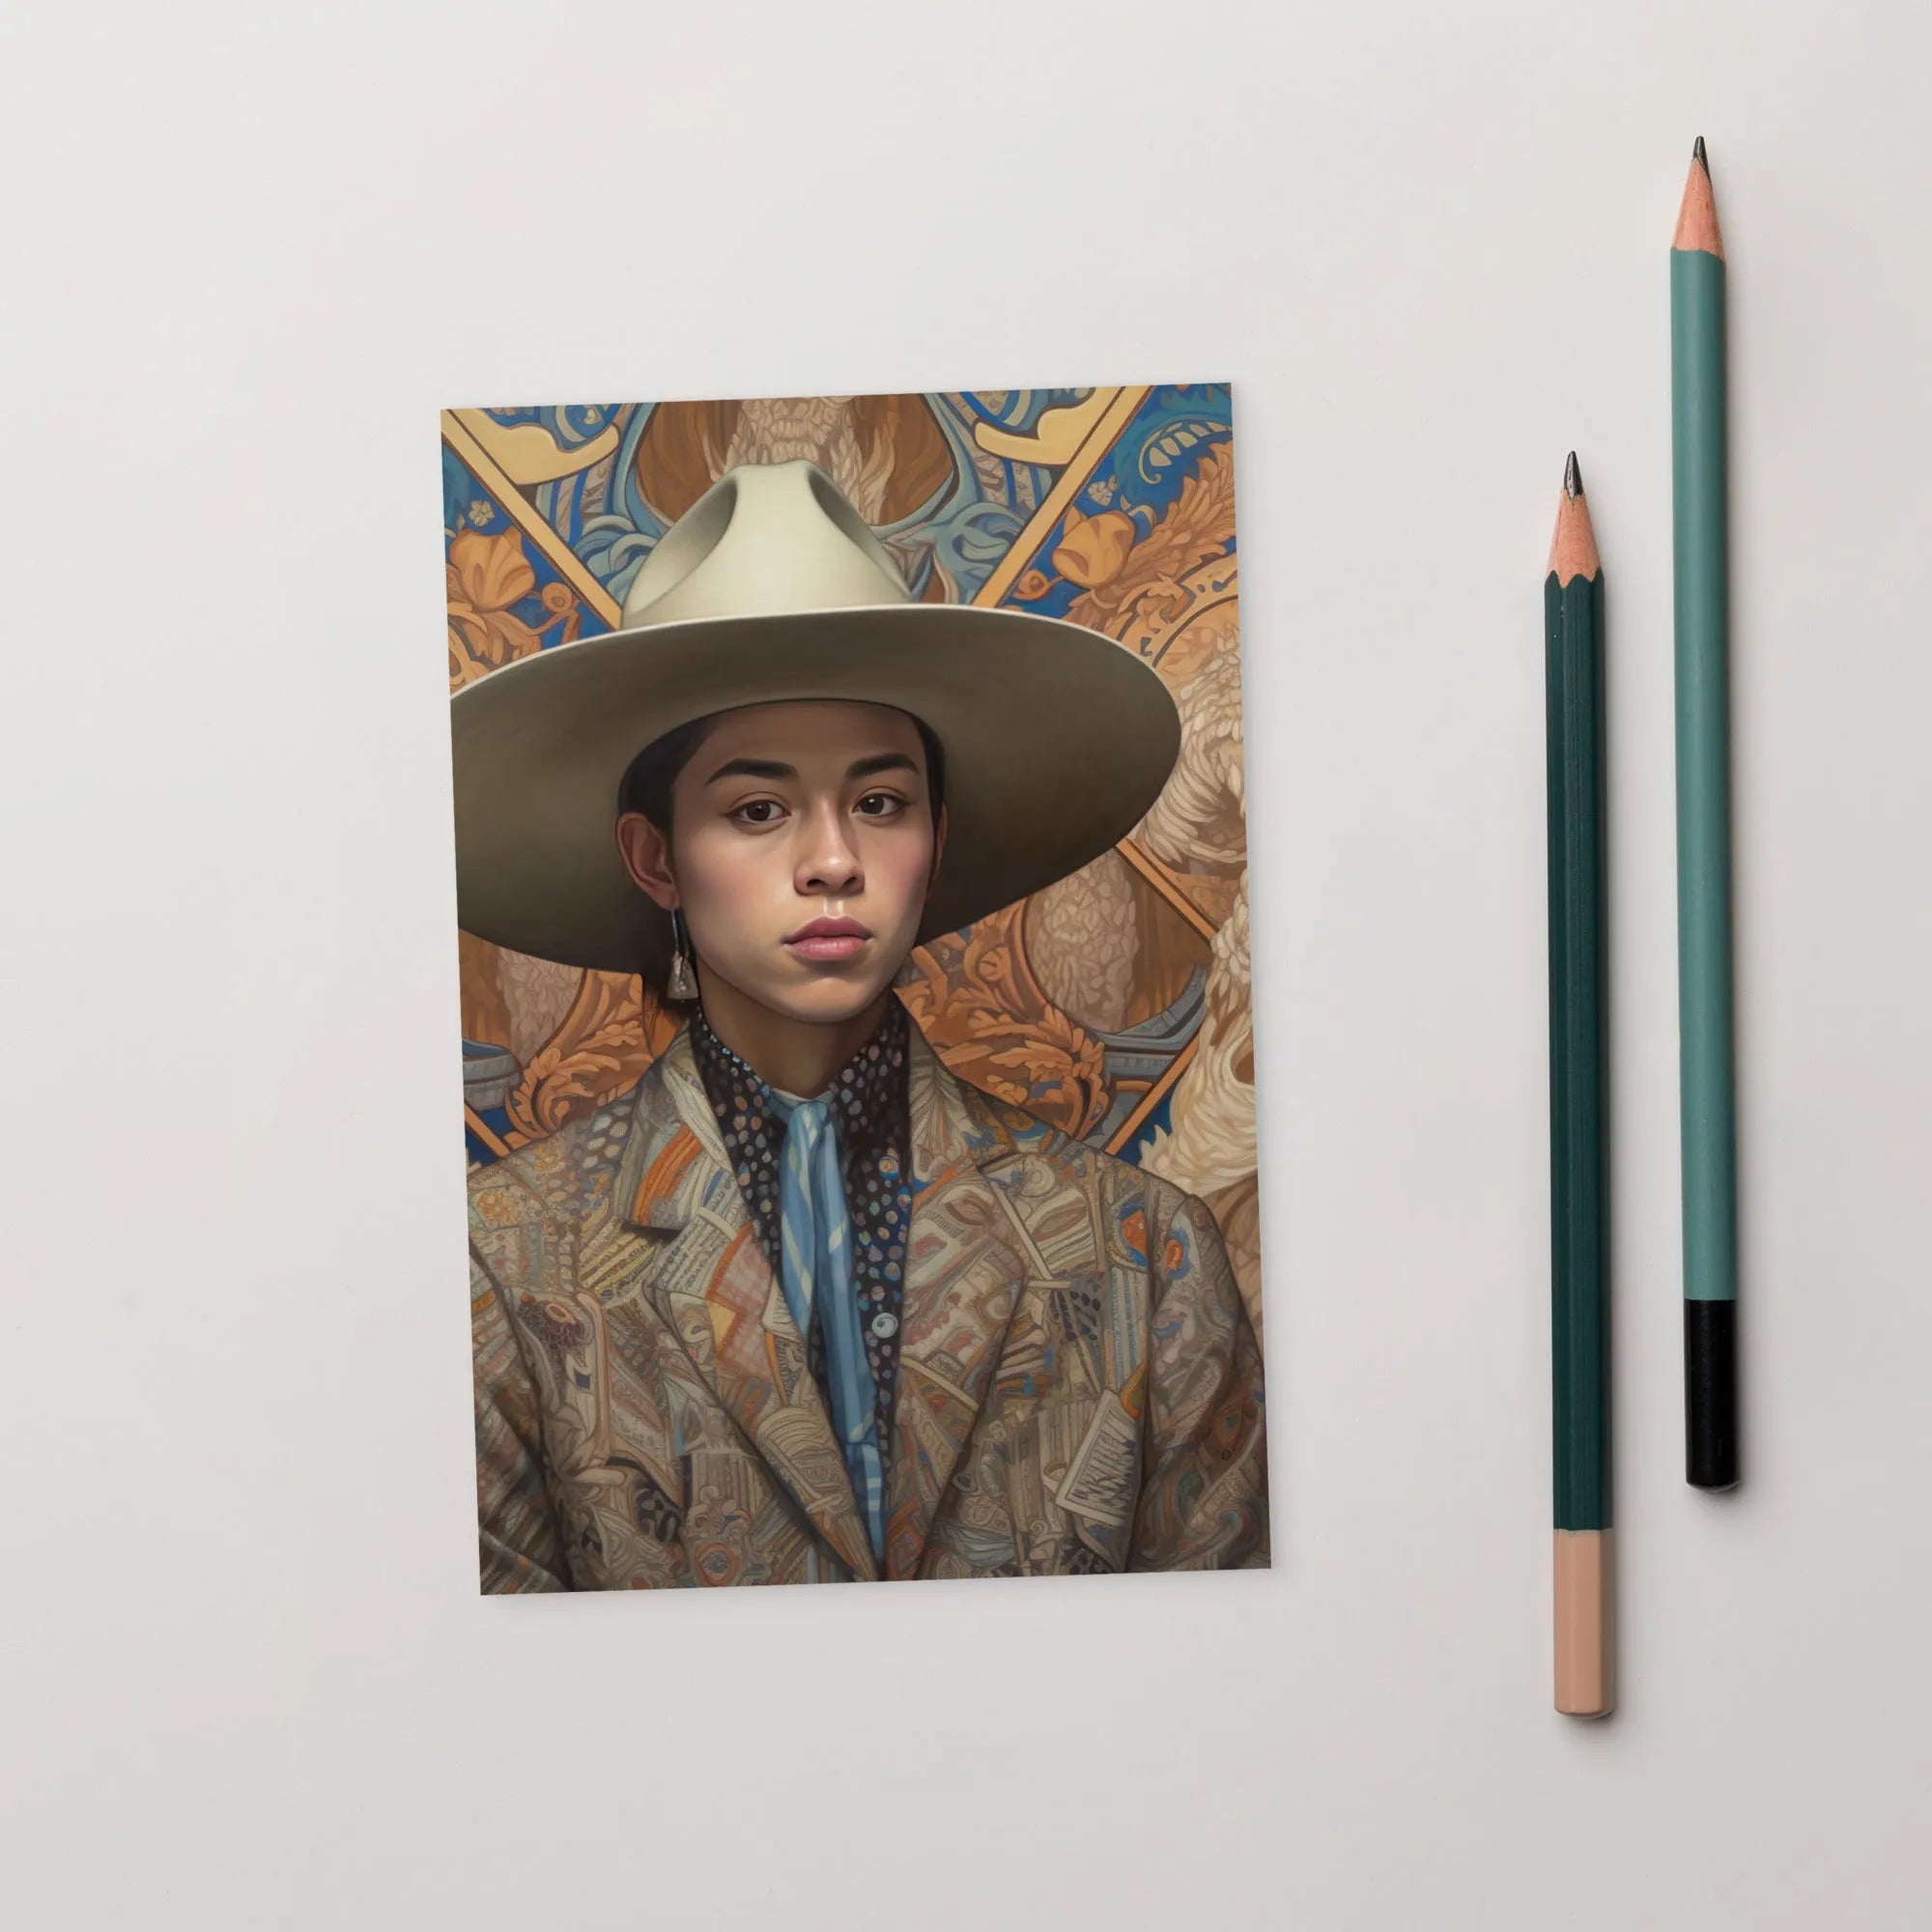 Angel The Transgender Cowboy - F2m Dandy Latinx Outlaw Art - 4’x6’ - Posters Prints & Visual Artwork - Aesthetic Art